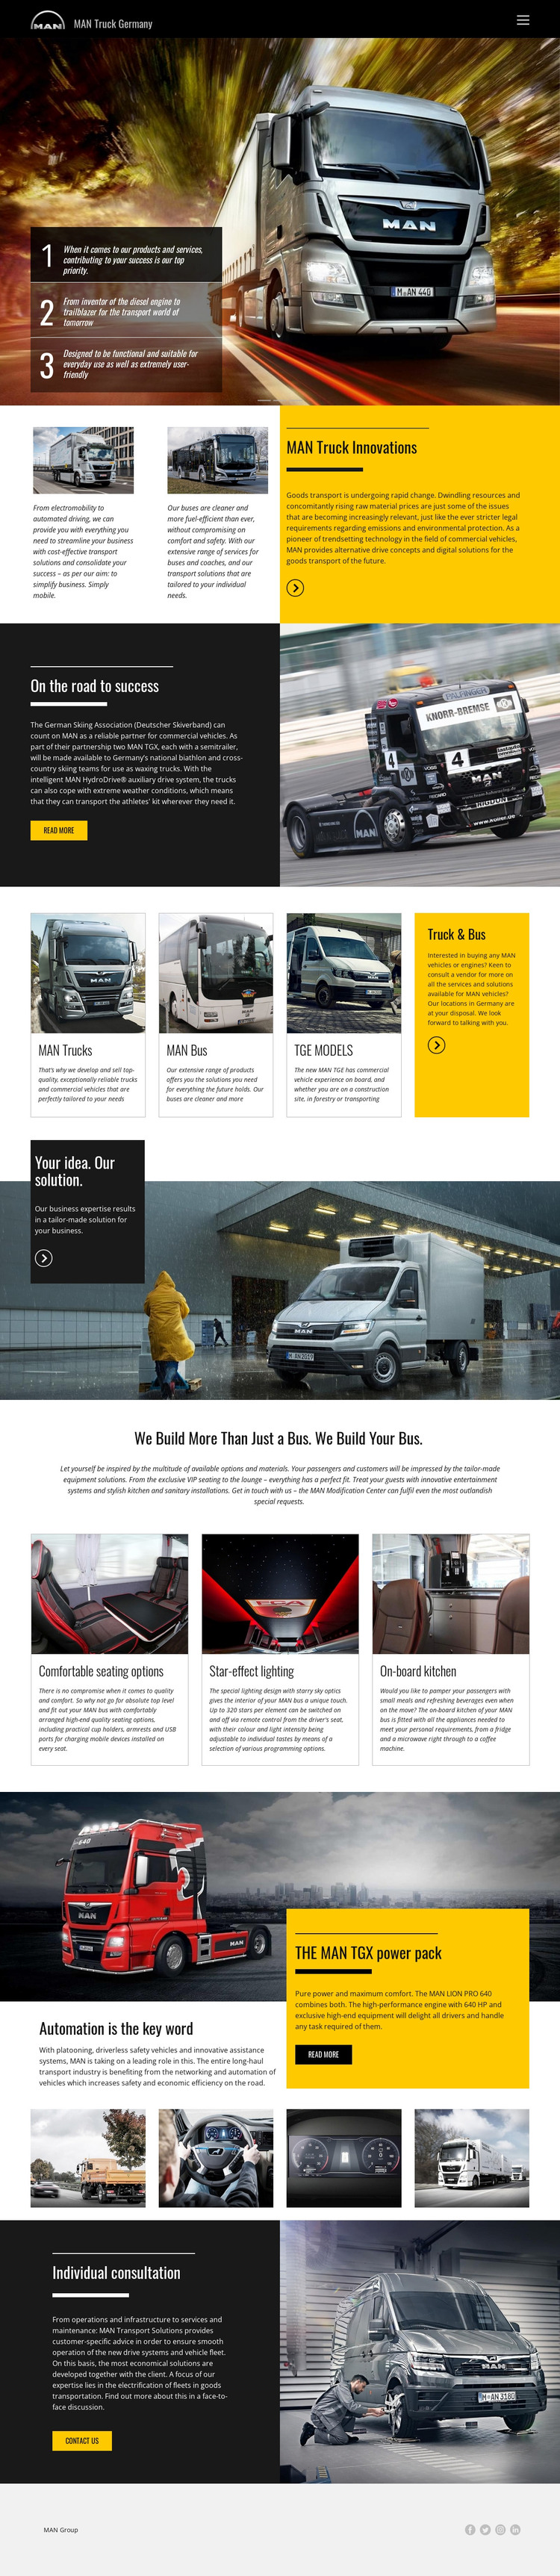 Man trucks for transportation WordPress Theme